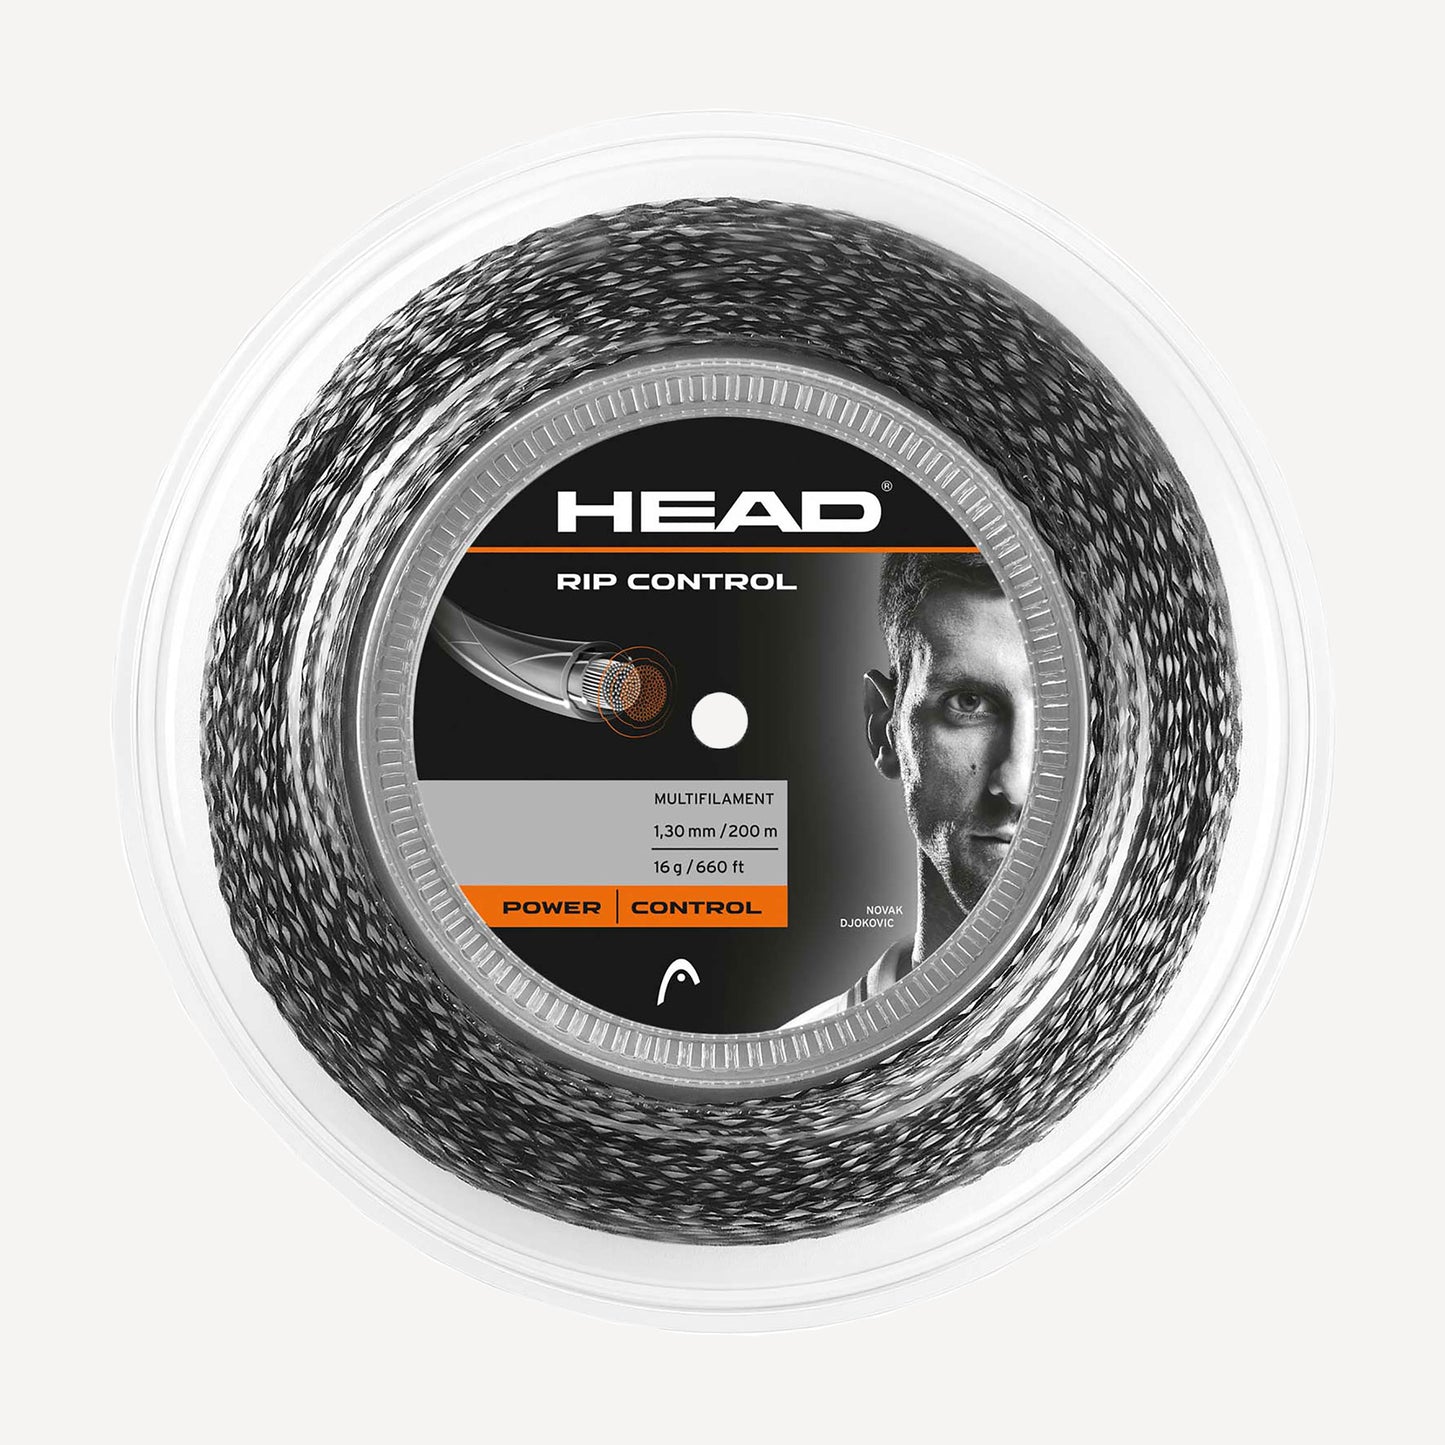 HEAD Rip Control Tennis String Reel 200m Black